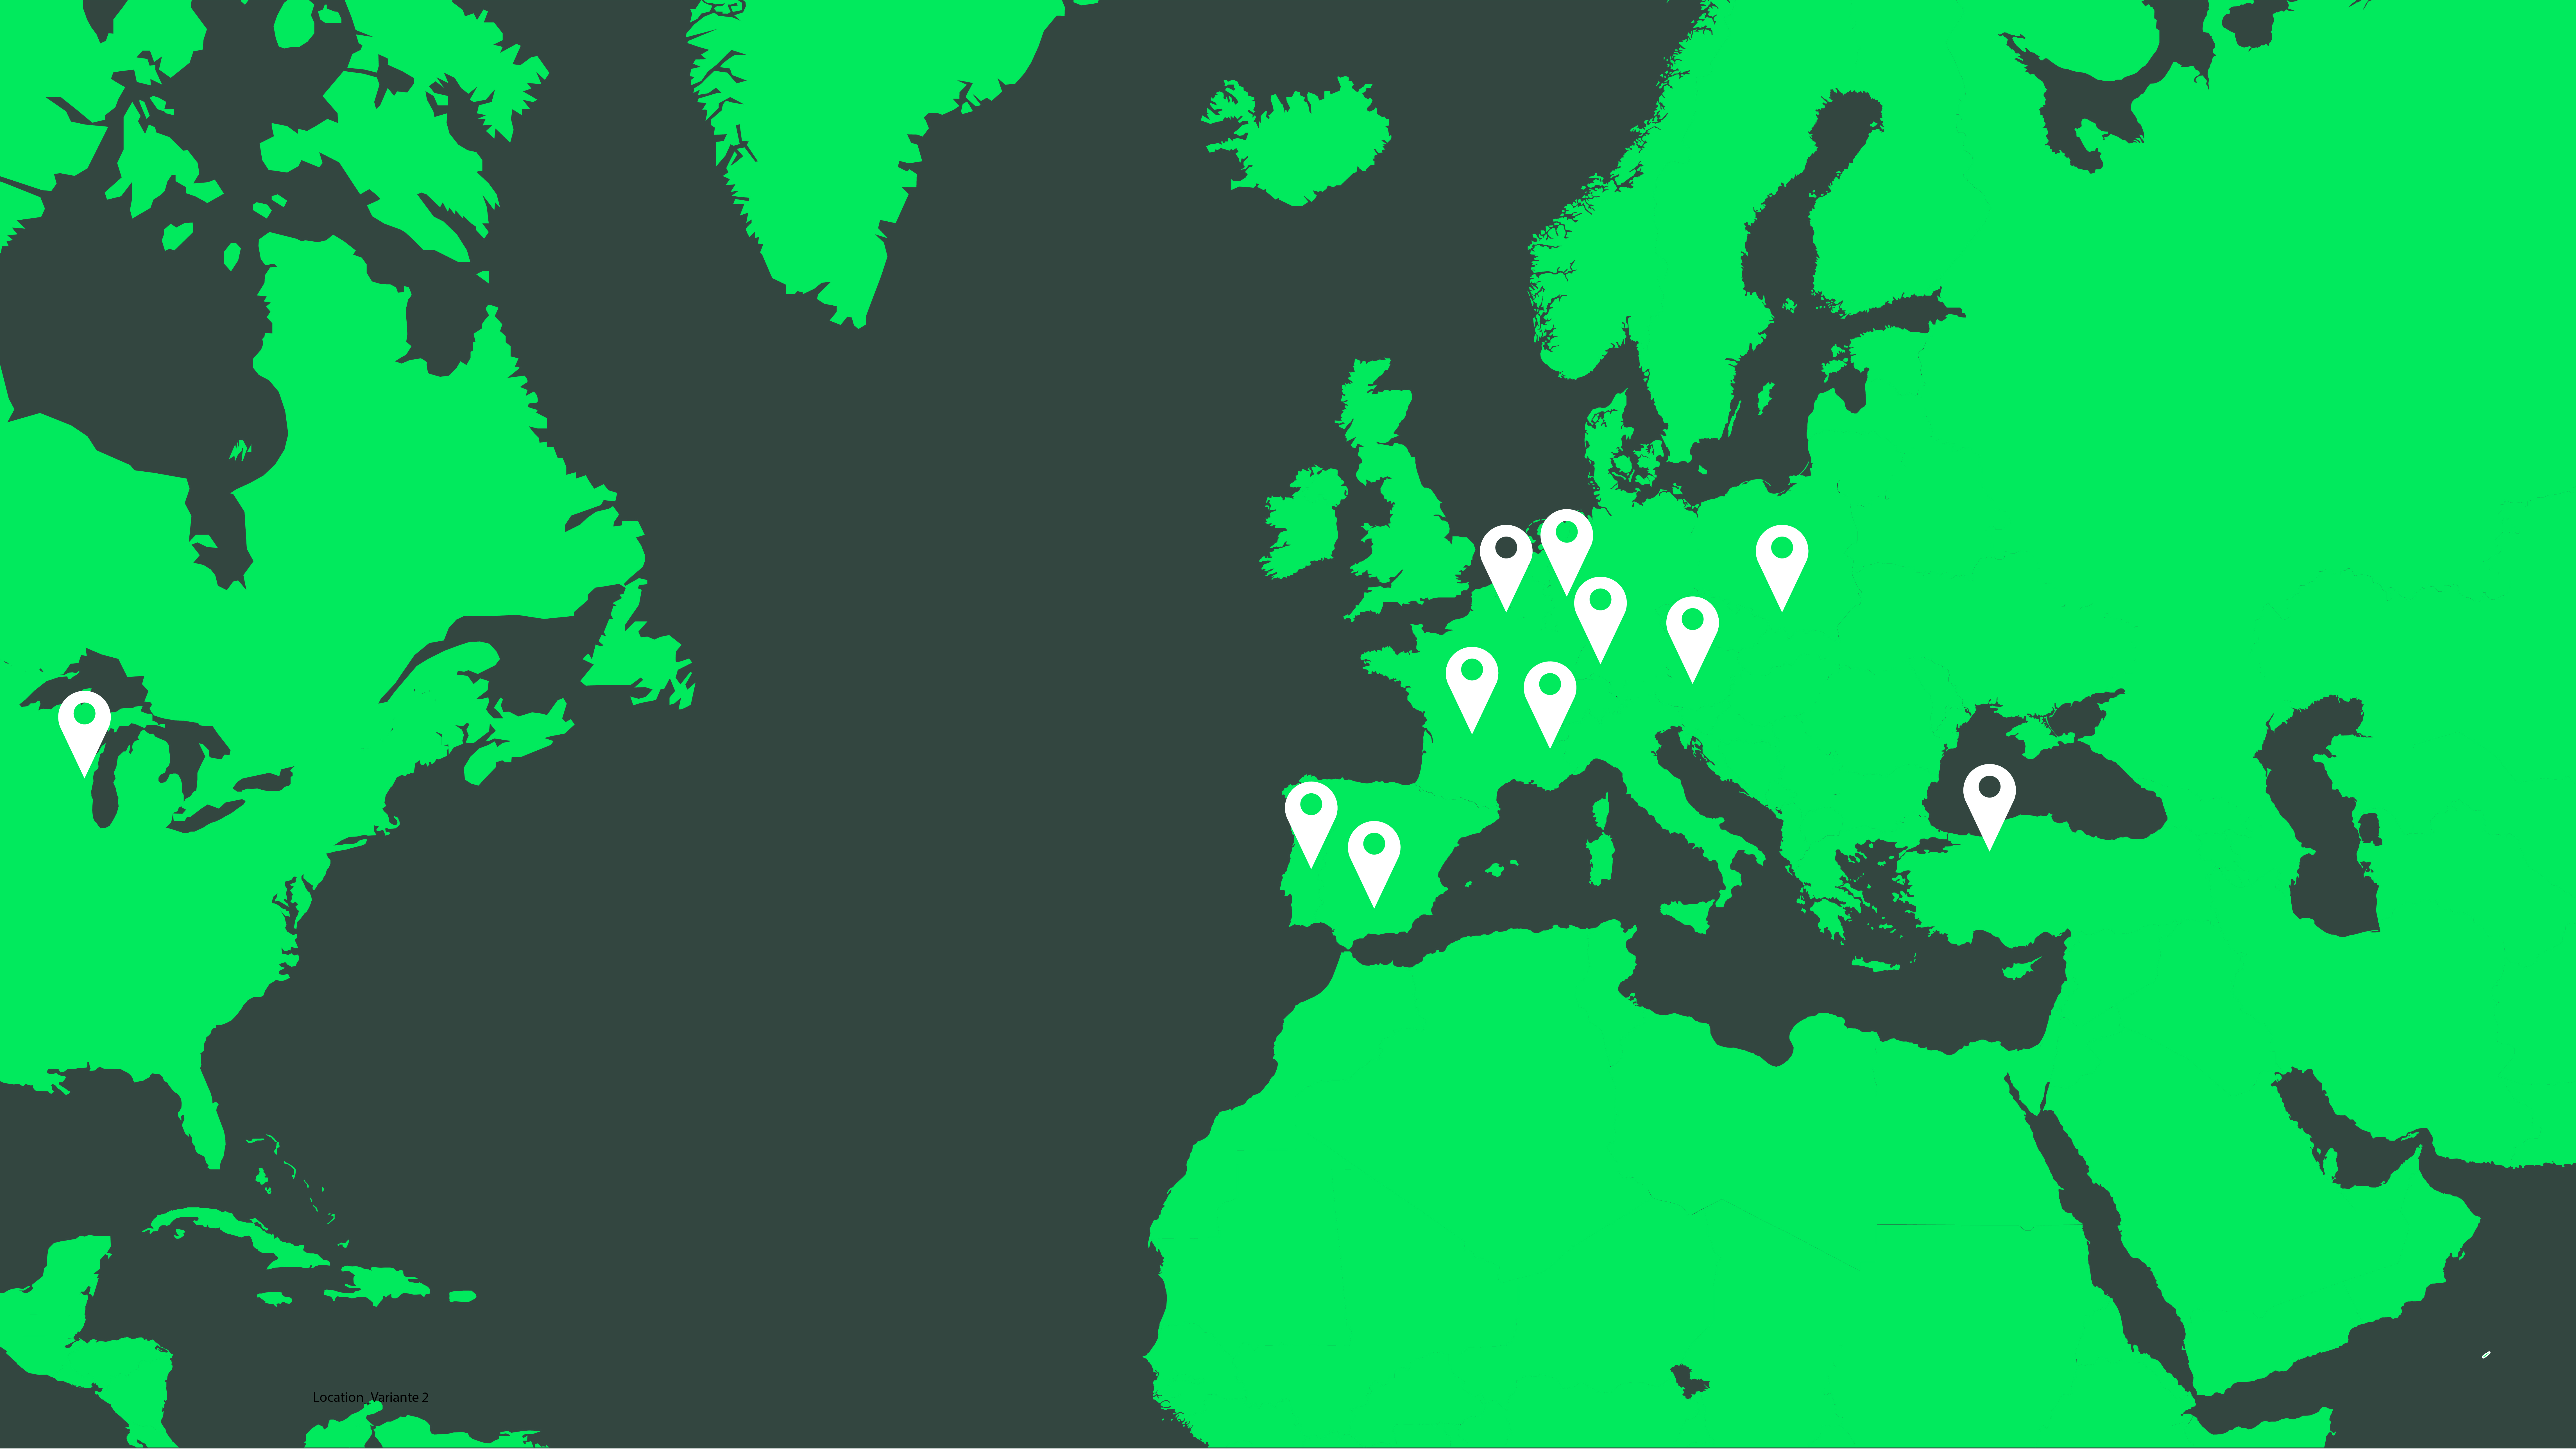 Movu global locations